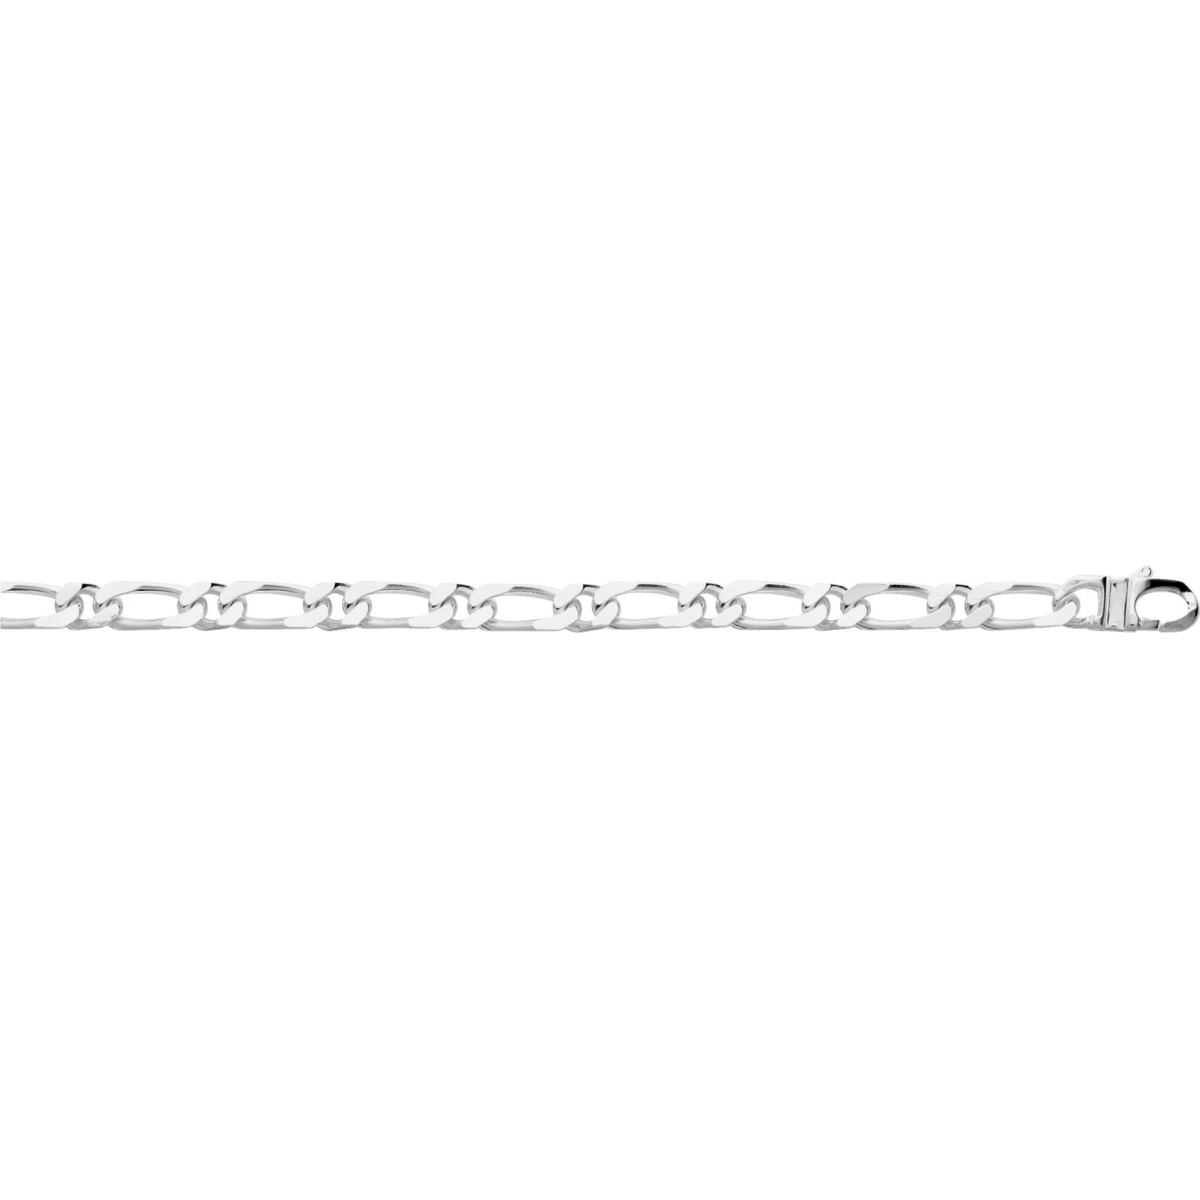 Necklace 6mm rh925 Silver - Size: 50  Lua Blanca  301268C.50